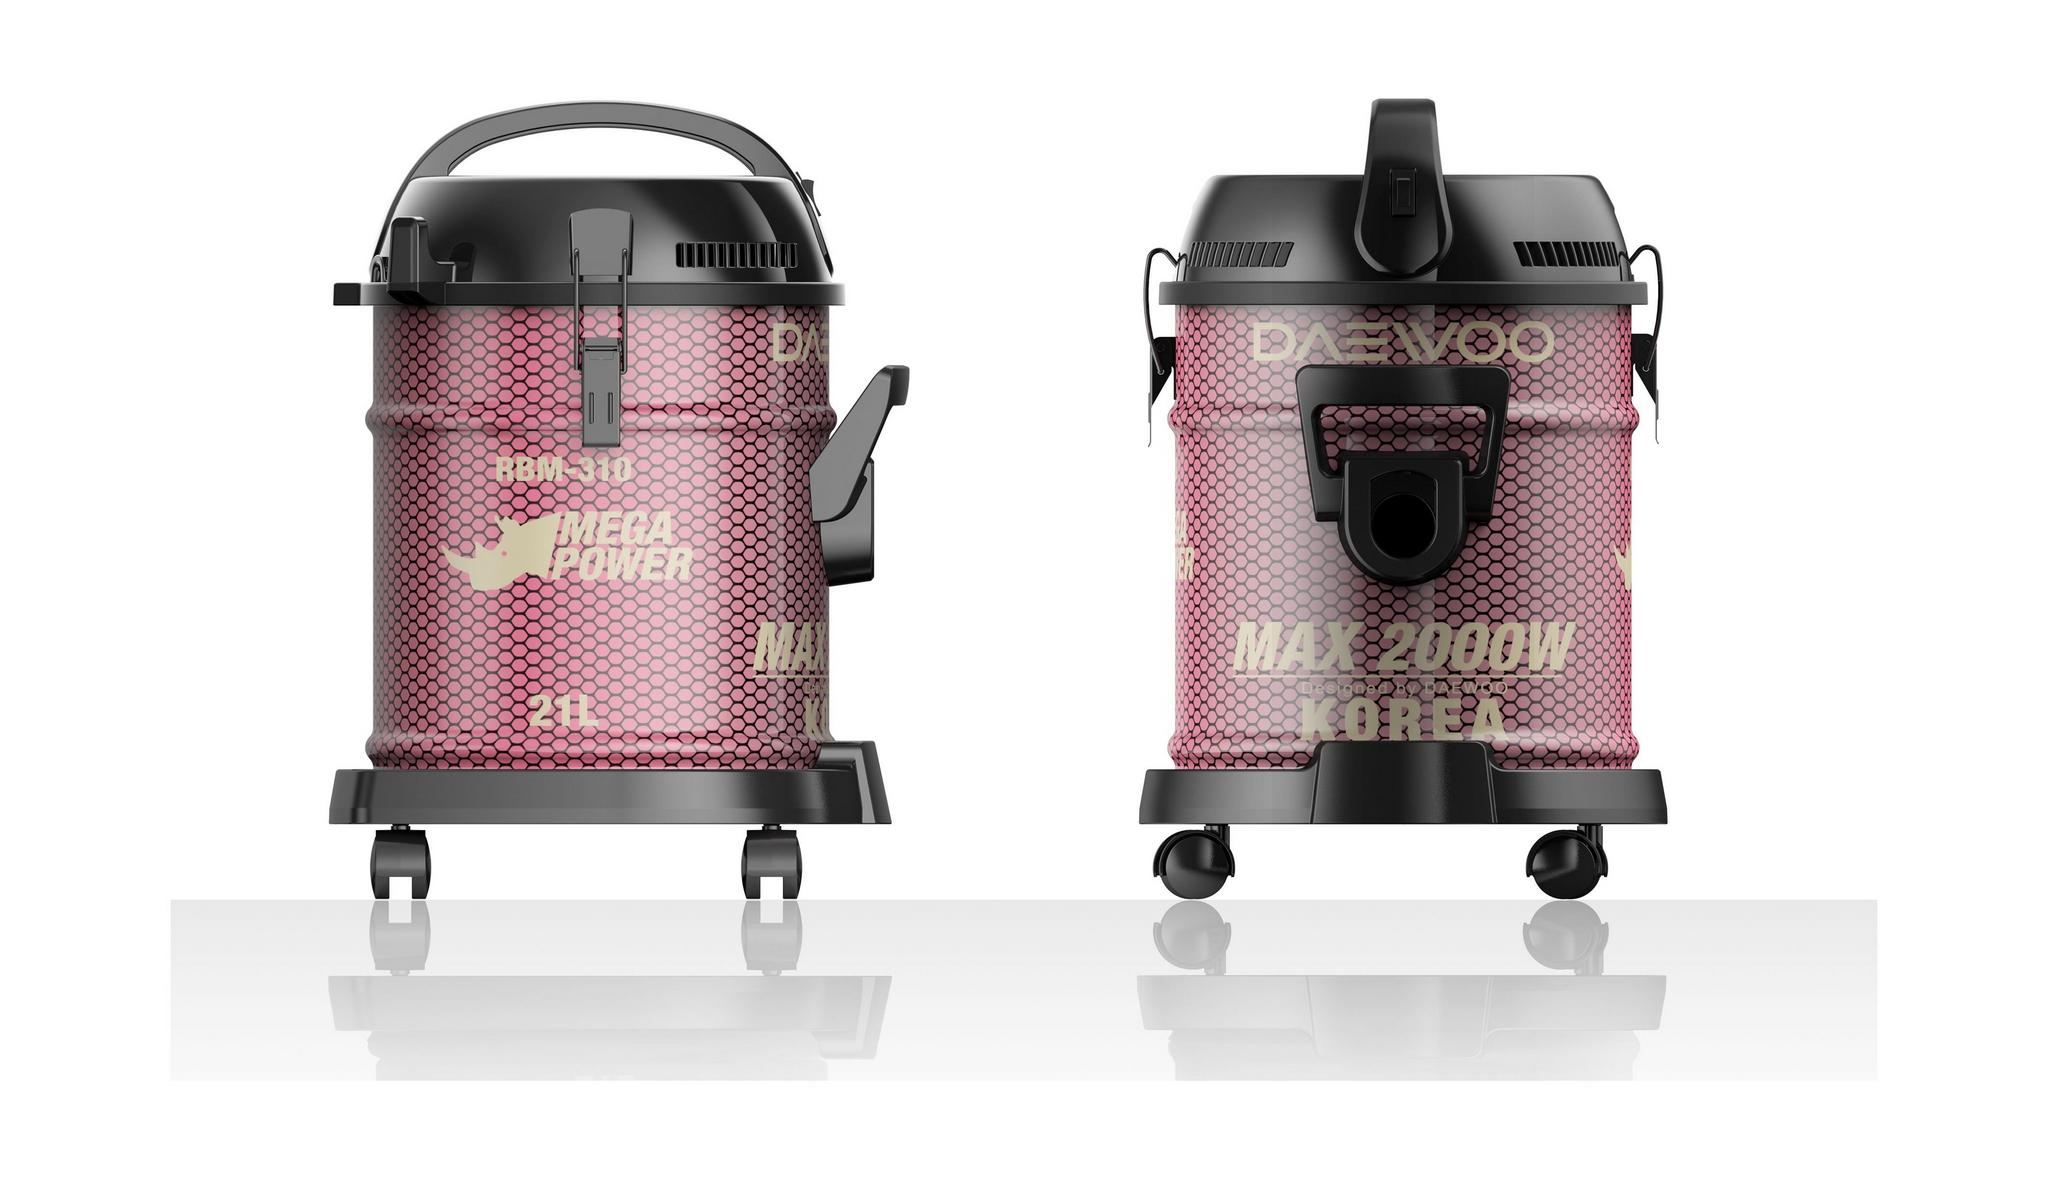 Daewoo 2000W 21L Drum Vacuum Cleaner (RBM-310)